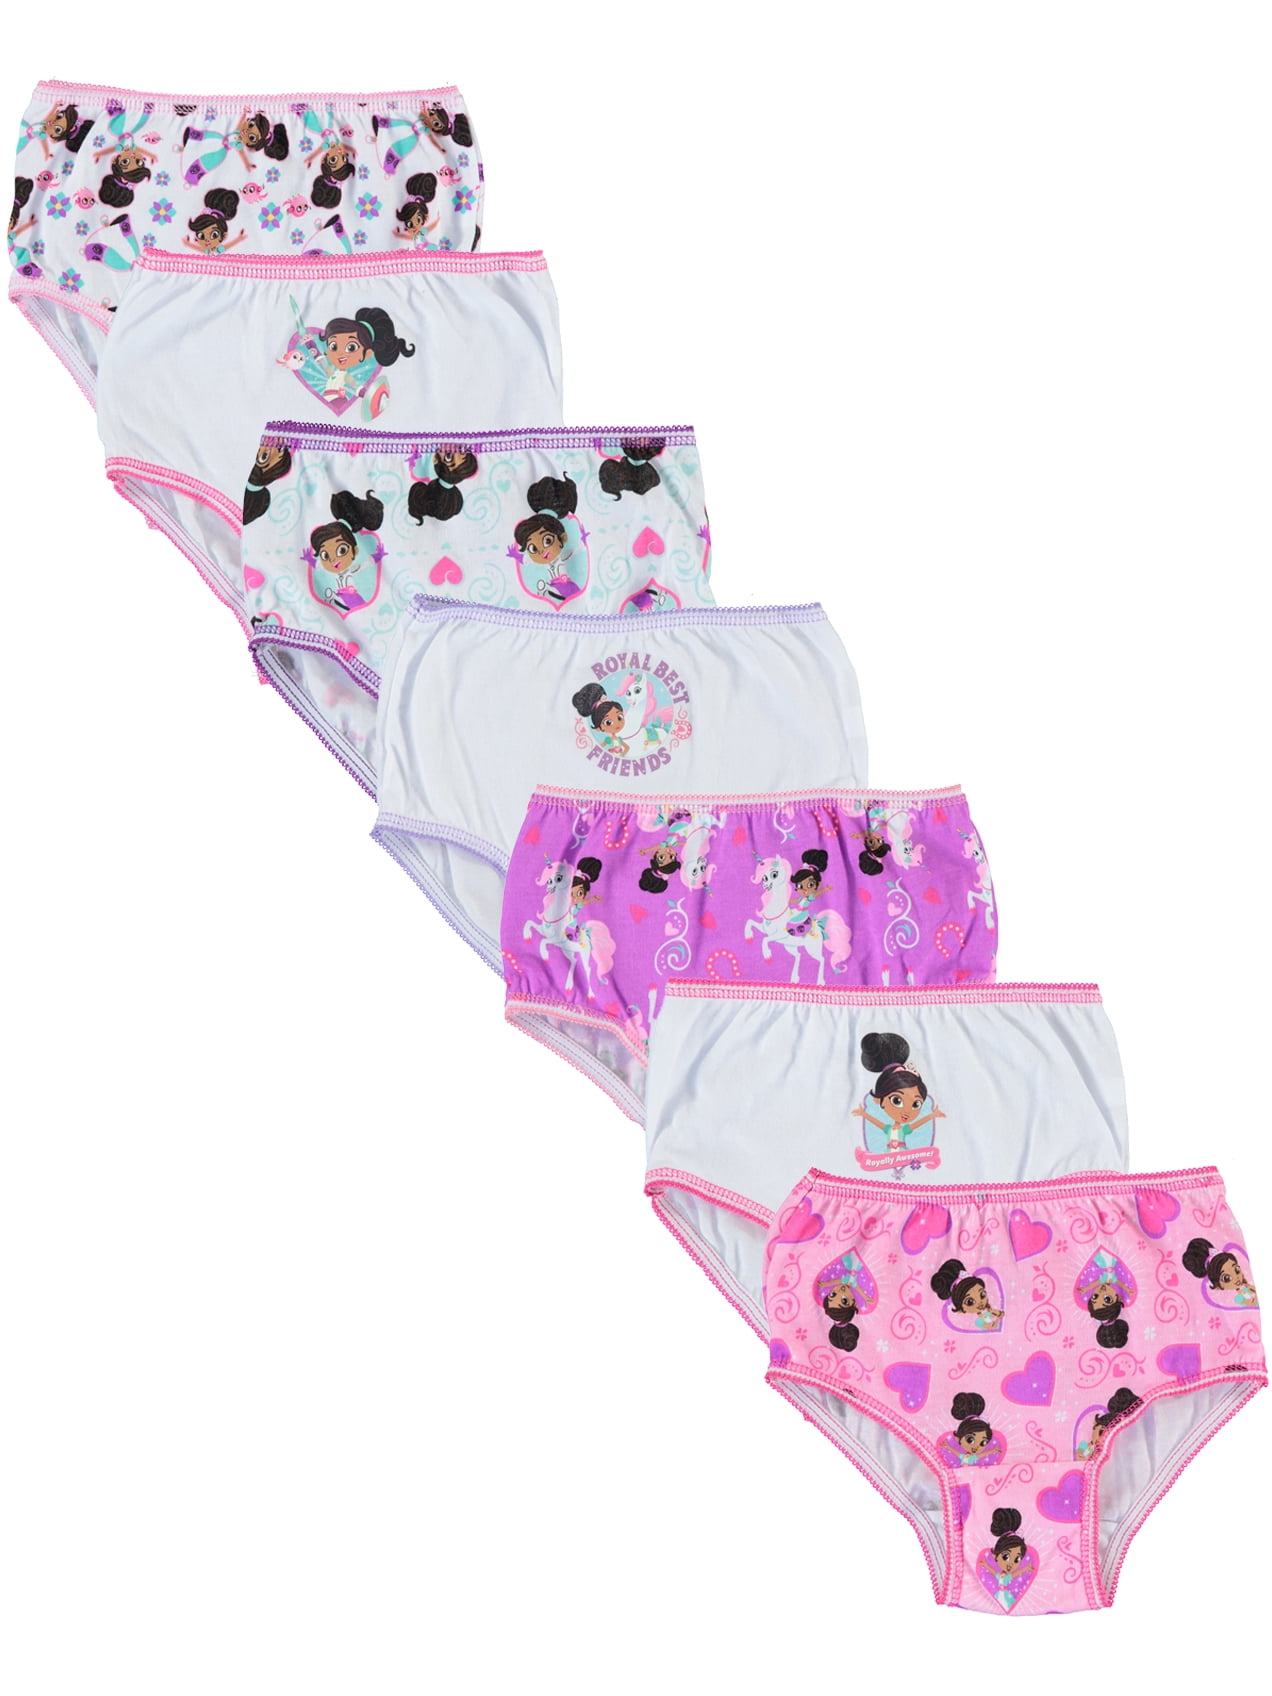 Nella the Princess Toddler Girls Panties Underwear, 7-Pack